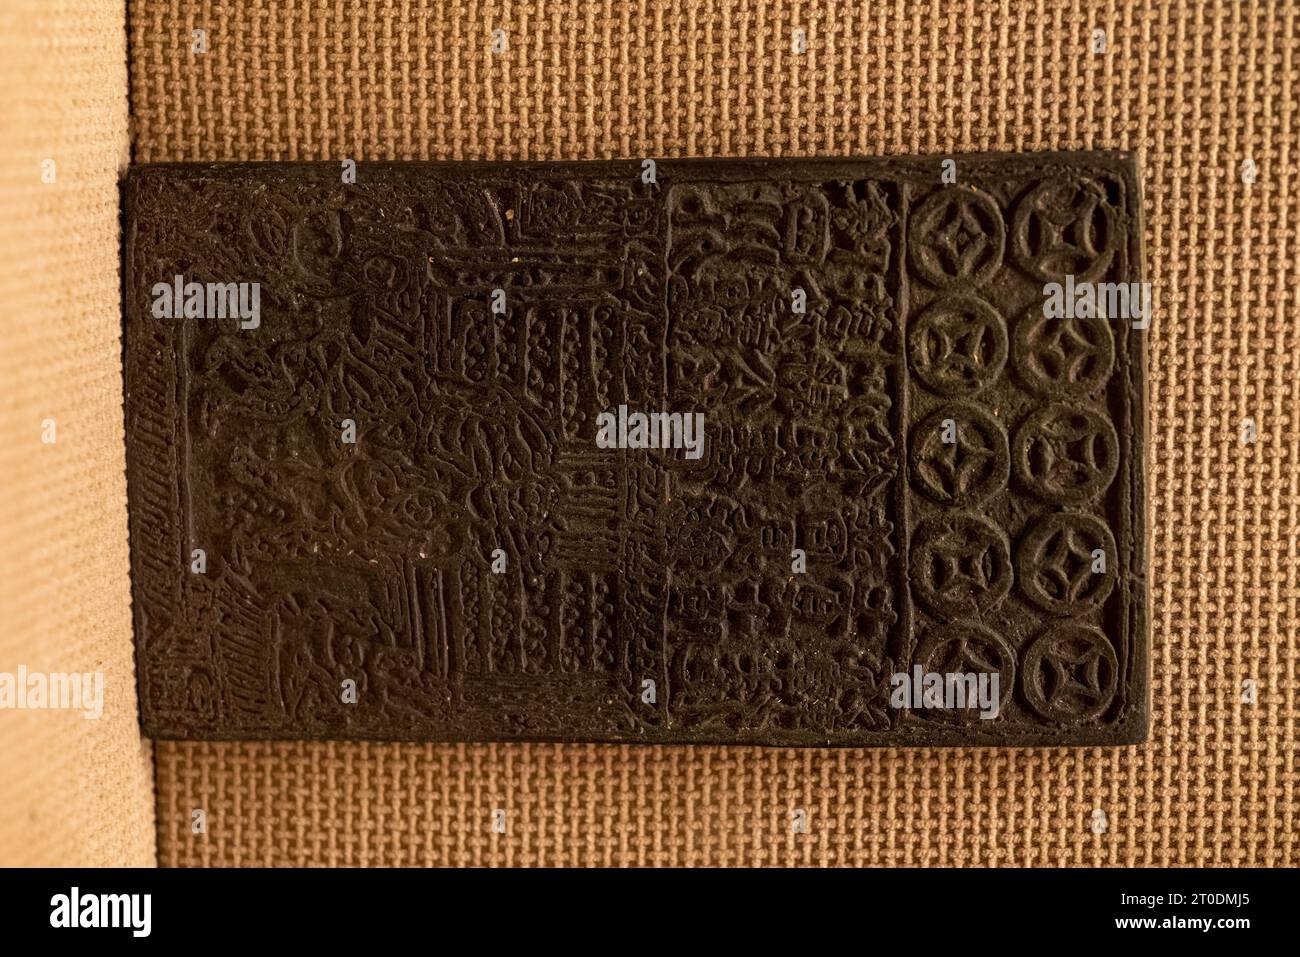 Ancient Chinese woodblock printing board, ancestor of printing press technique from China,shot at China engraving printing museum. Stock Photo